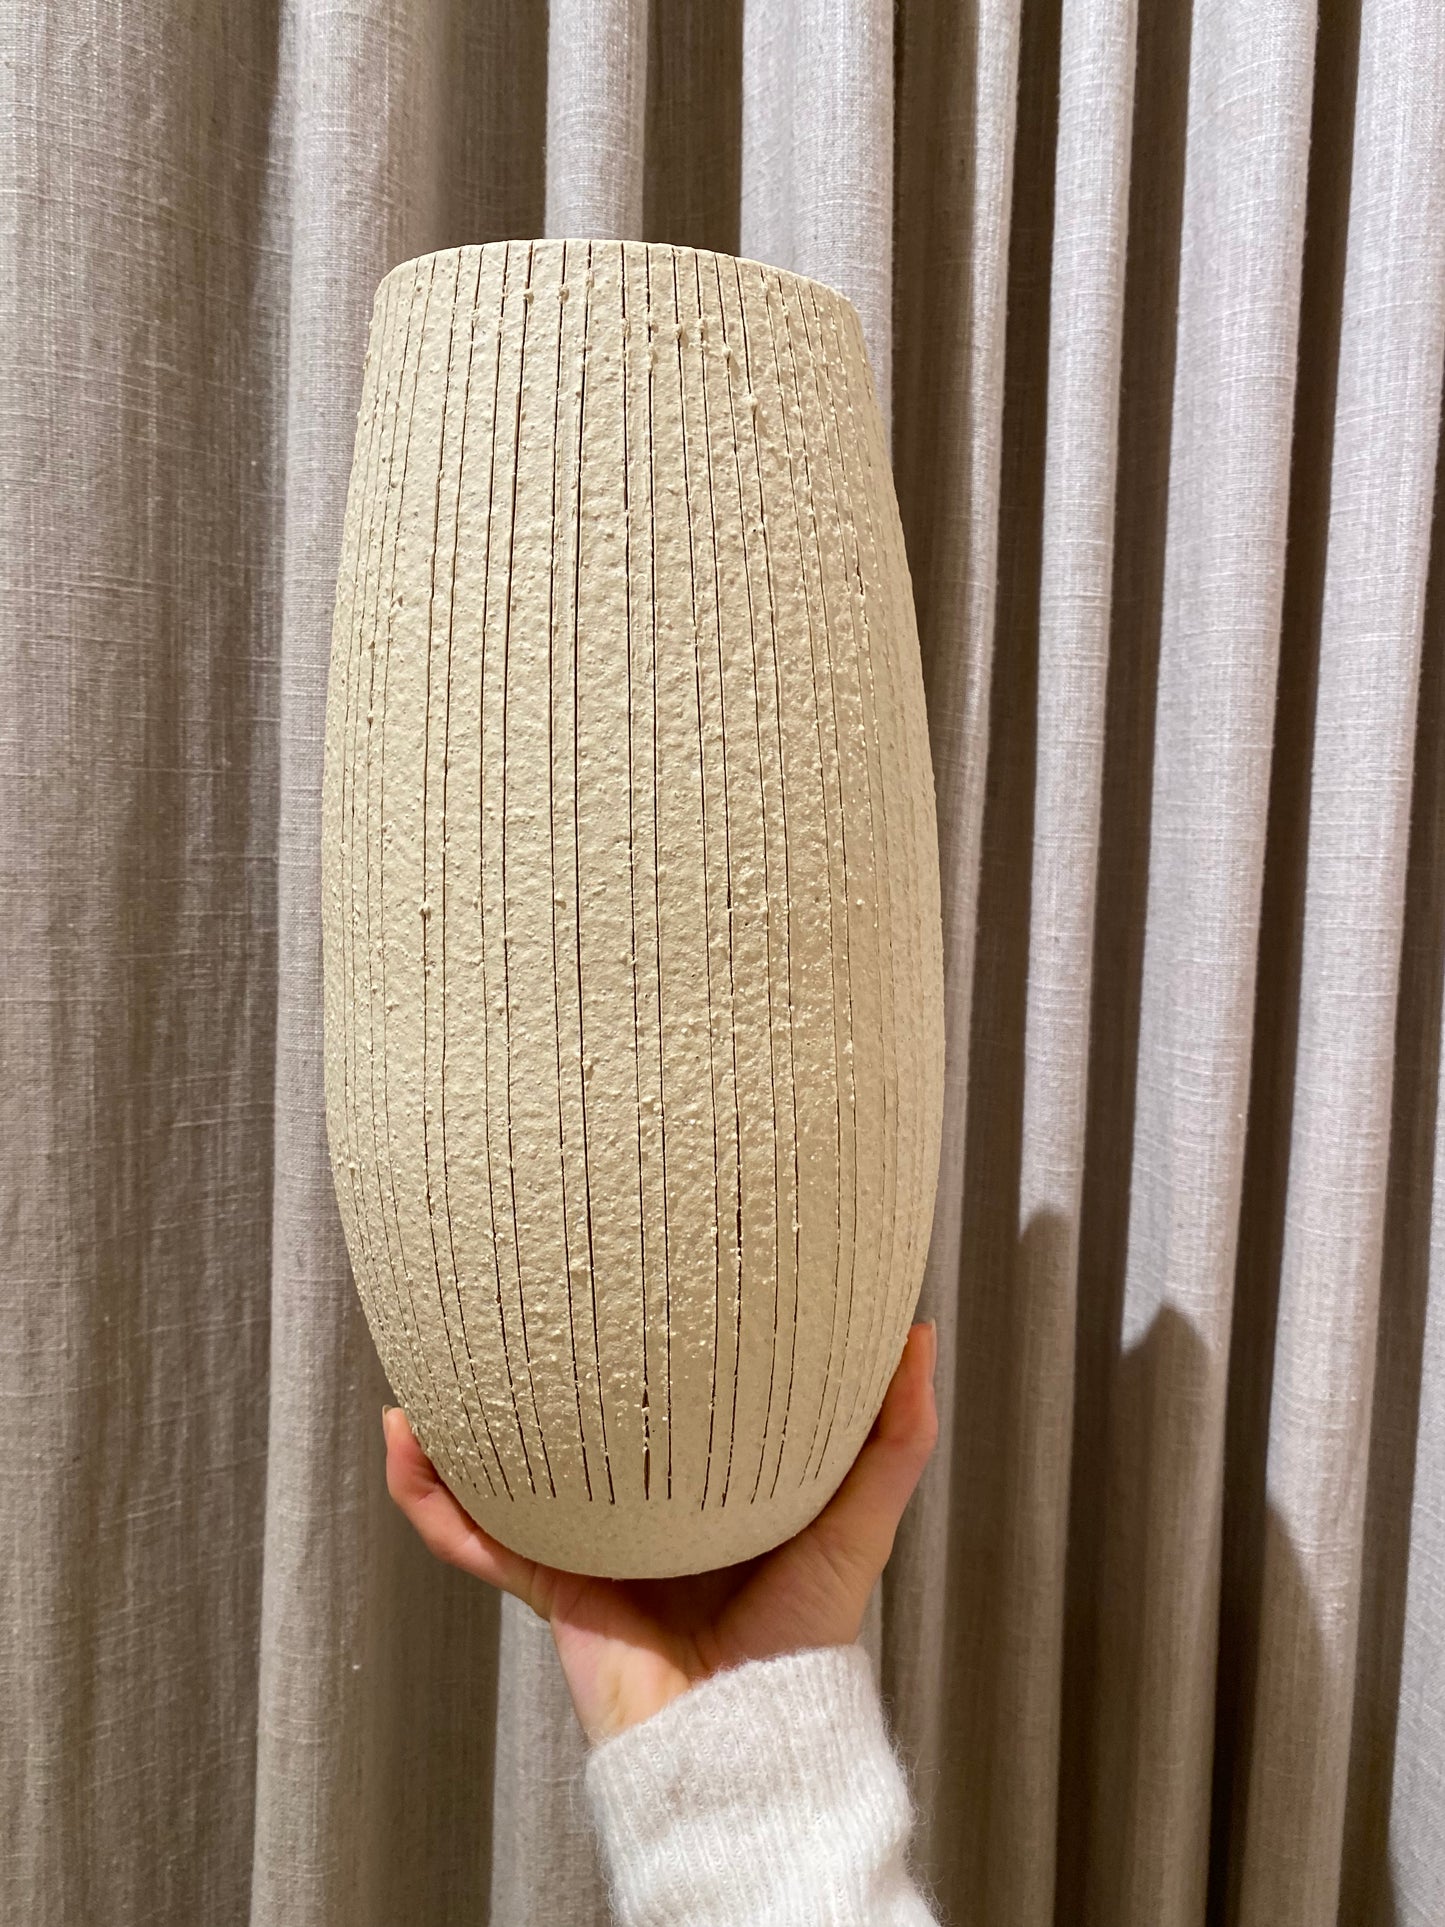 Stor håndlavet vase i beige med striber